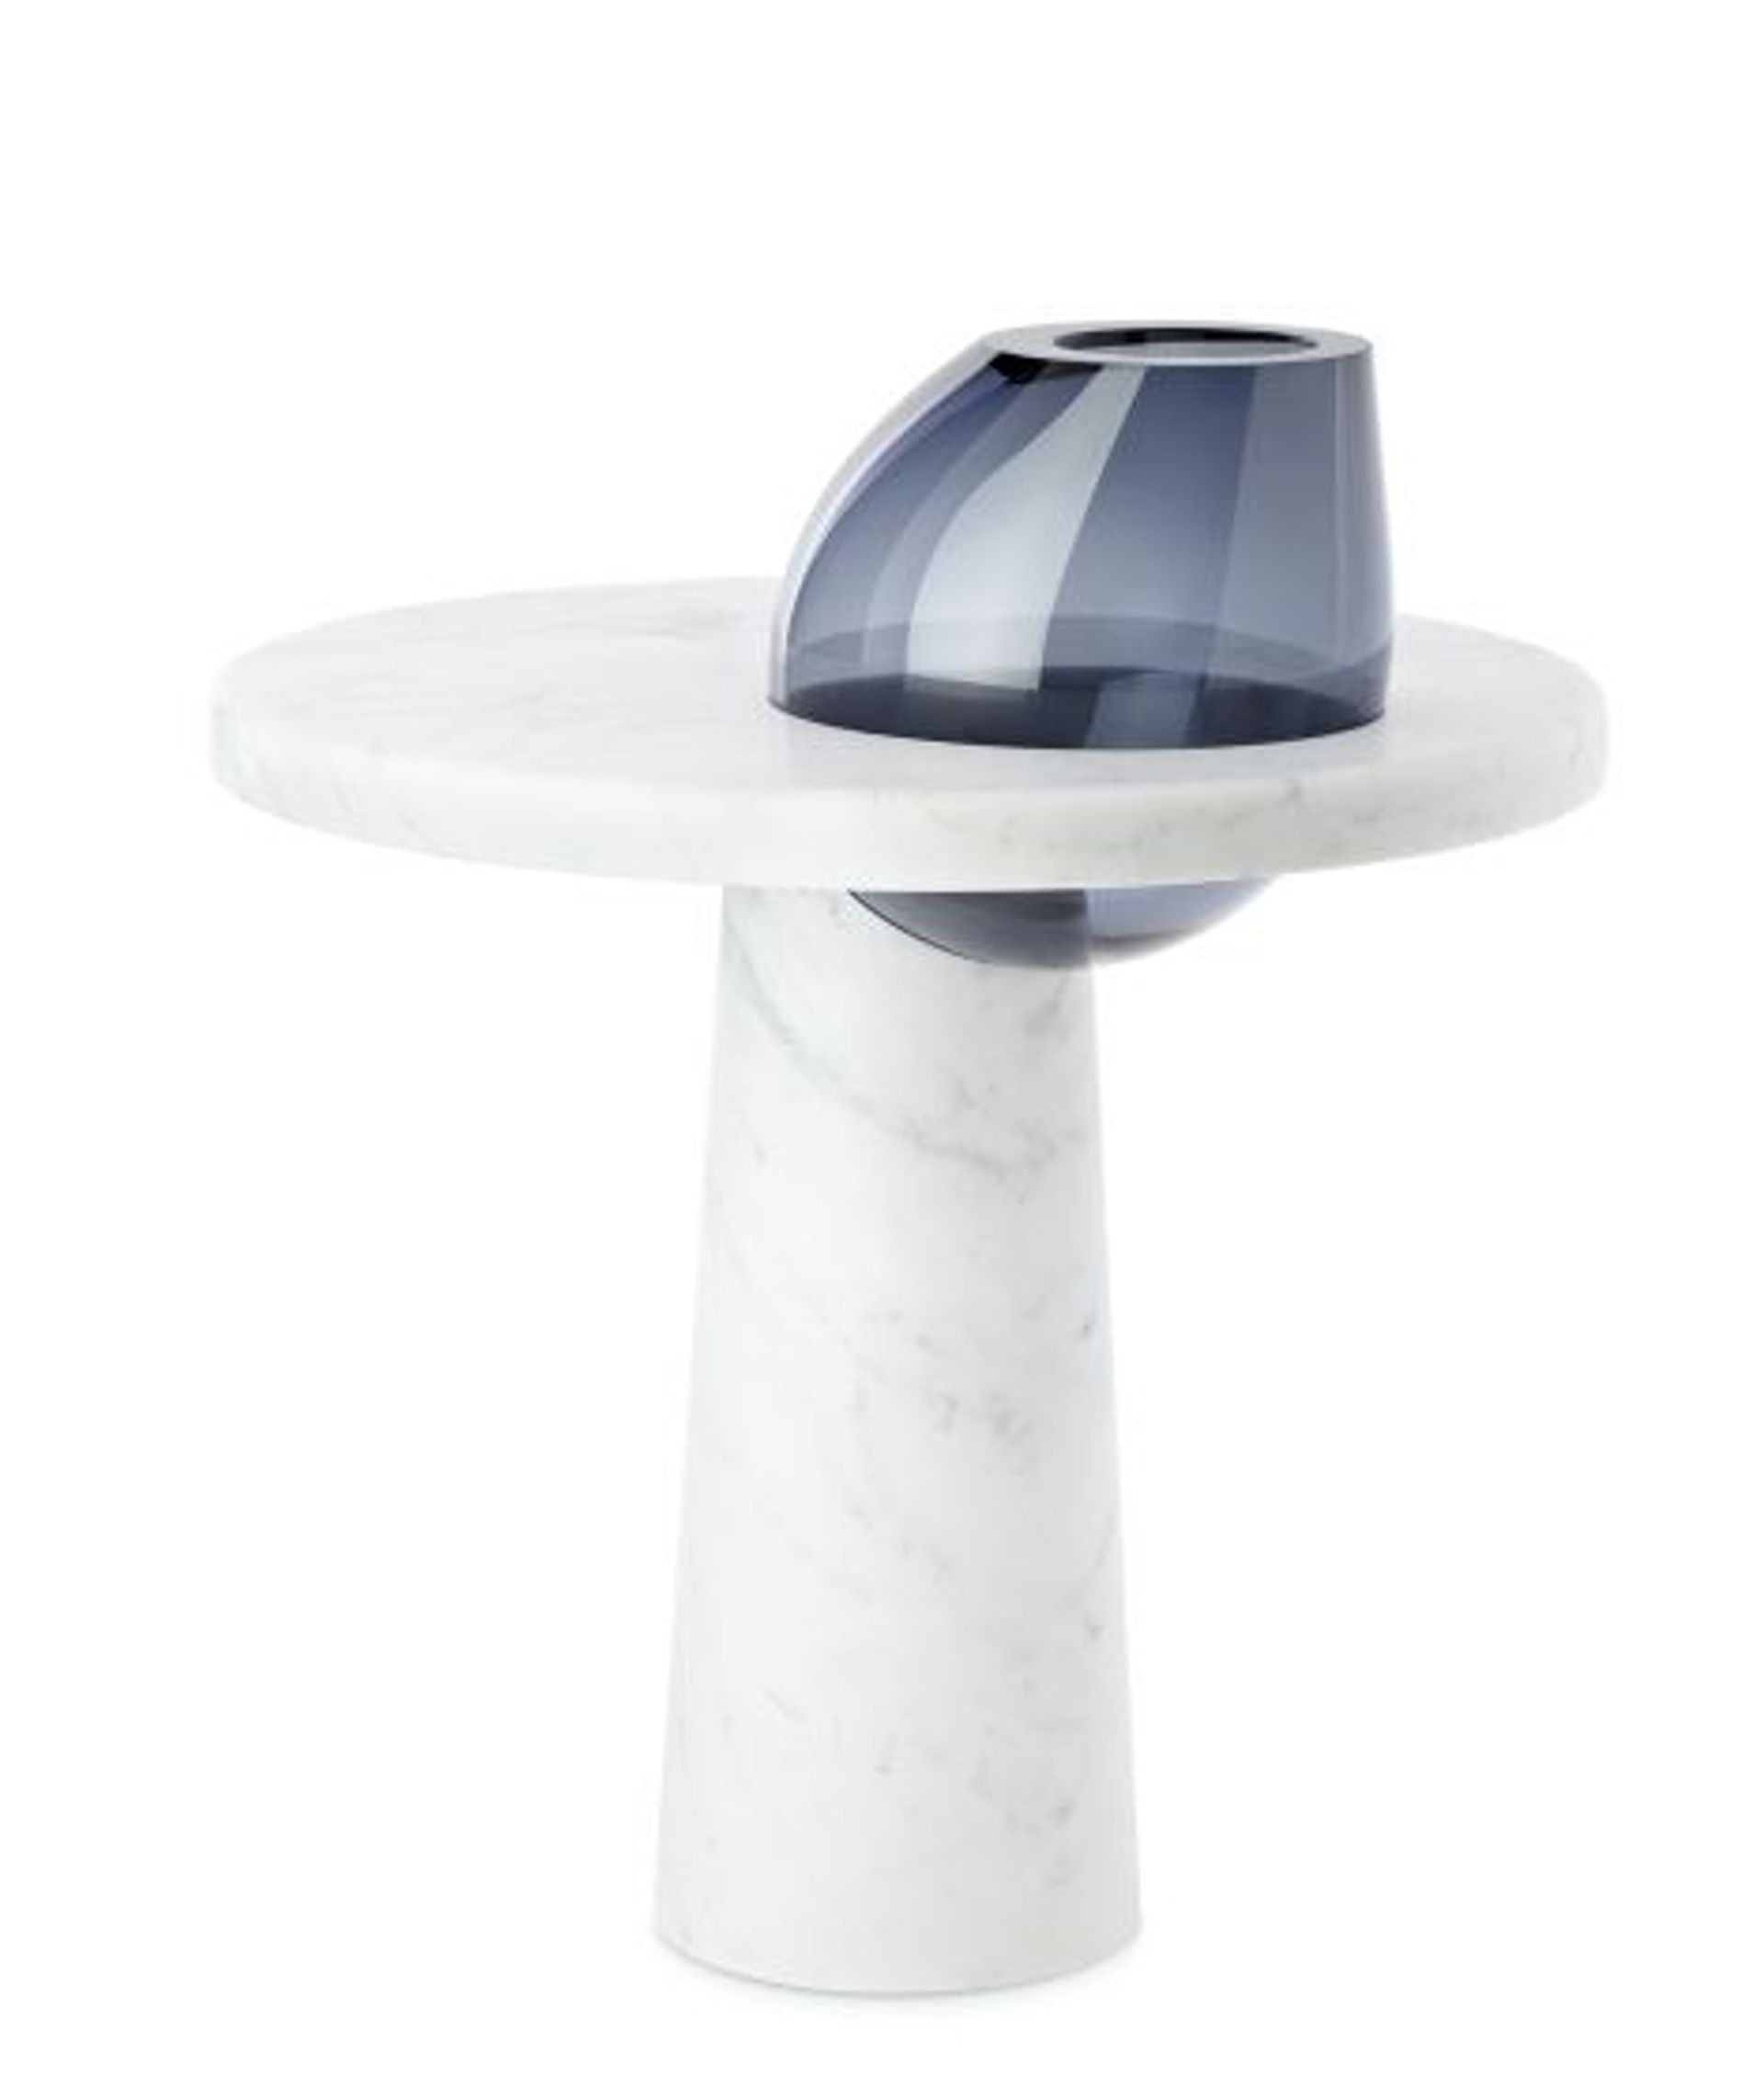 Emmanuel Babled, Osmosi Side Table, 2013, marbre de Carrare et verre de Murano. 

Courtesy de la galerie Y/V Gastou